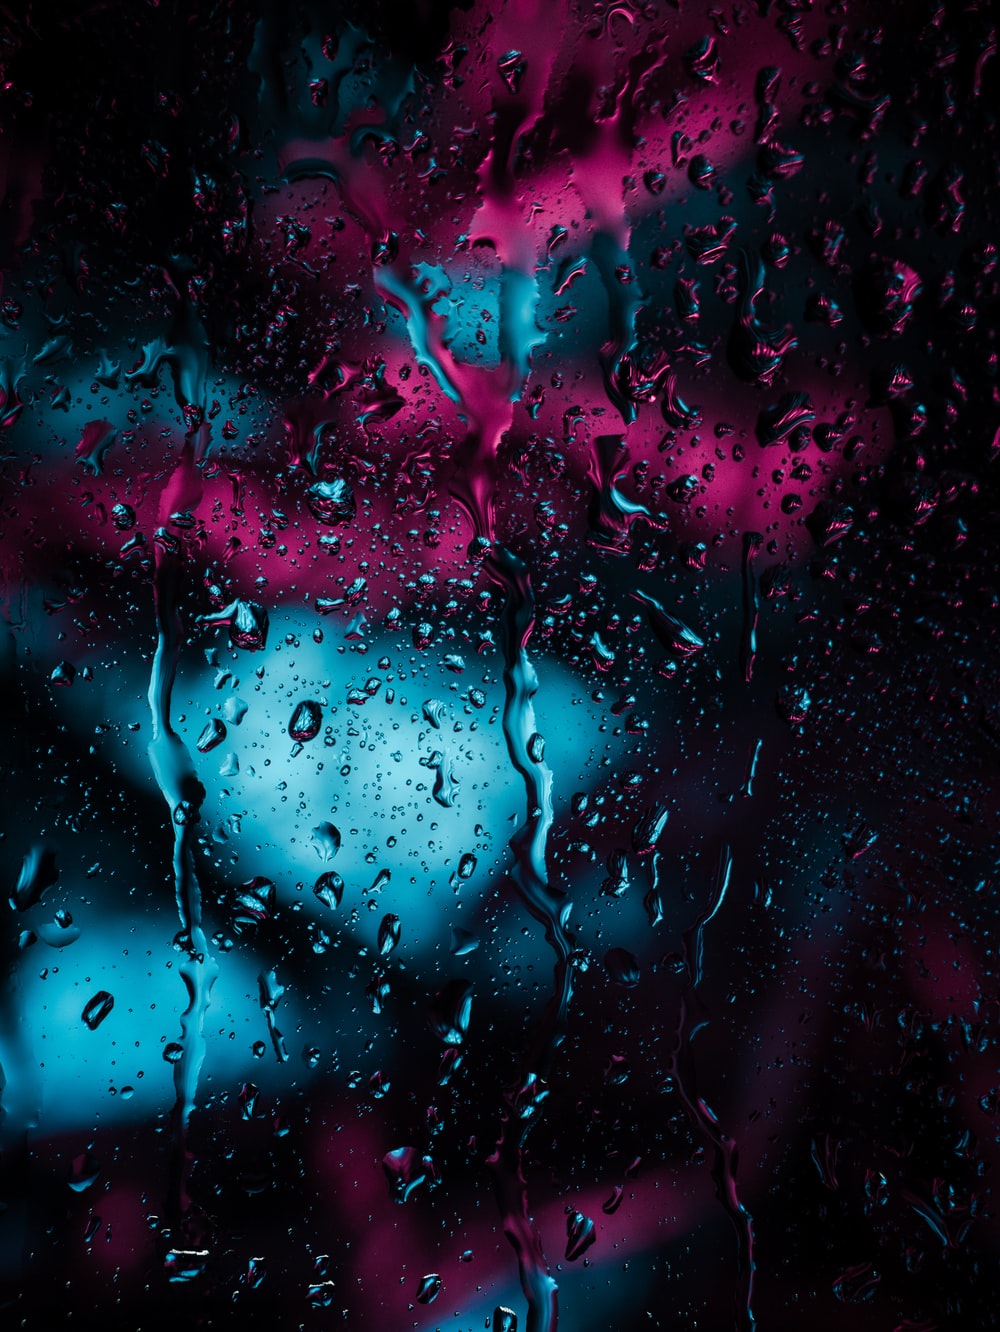 Neon Rain Picture. Download Free Image